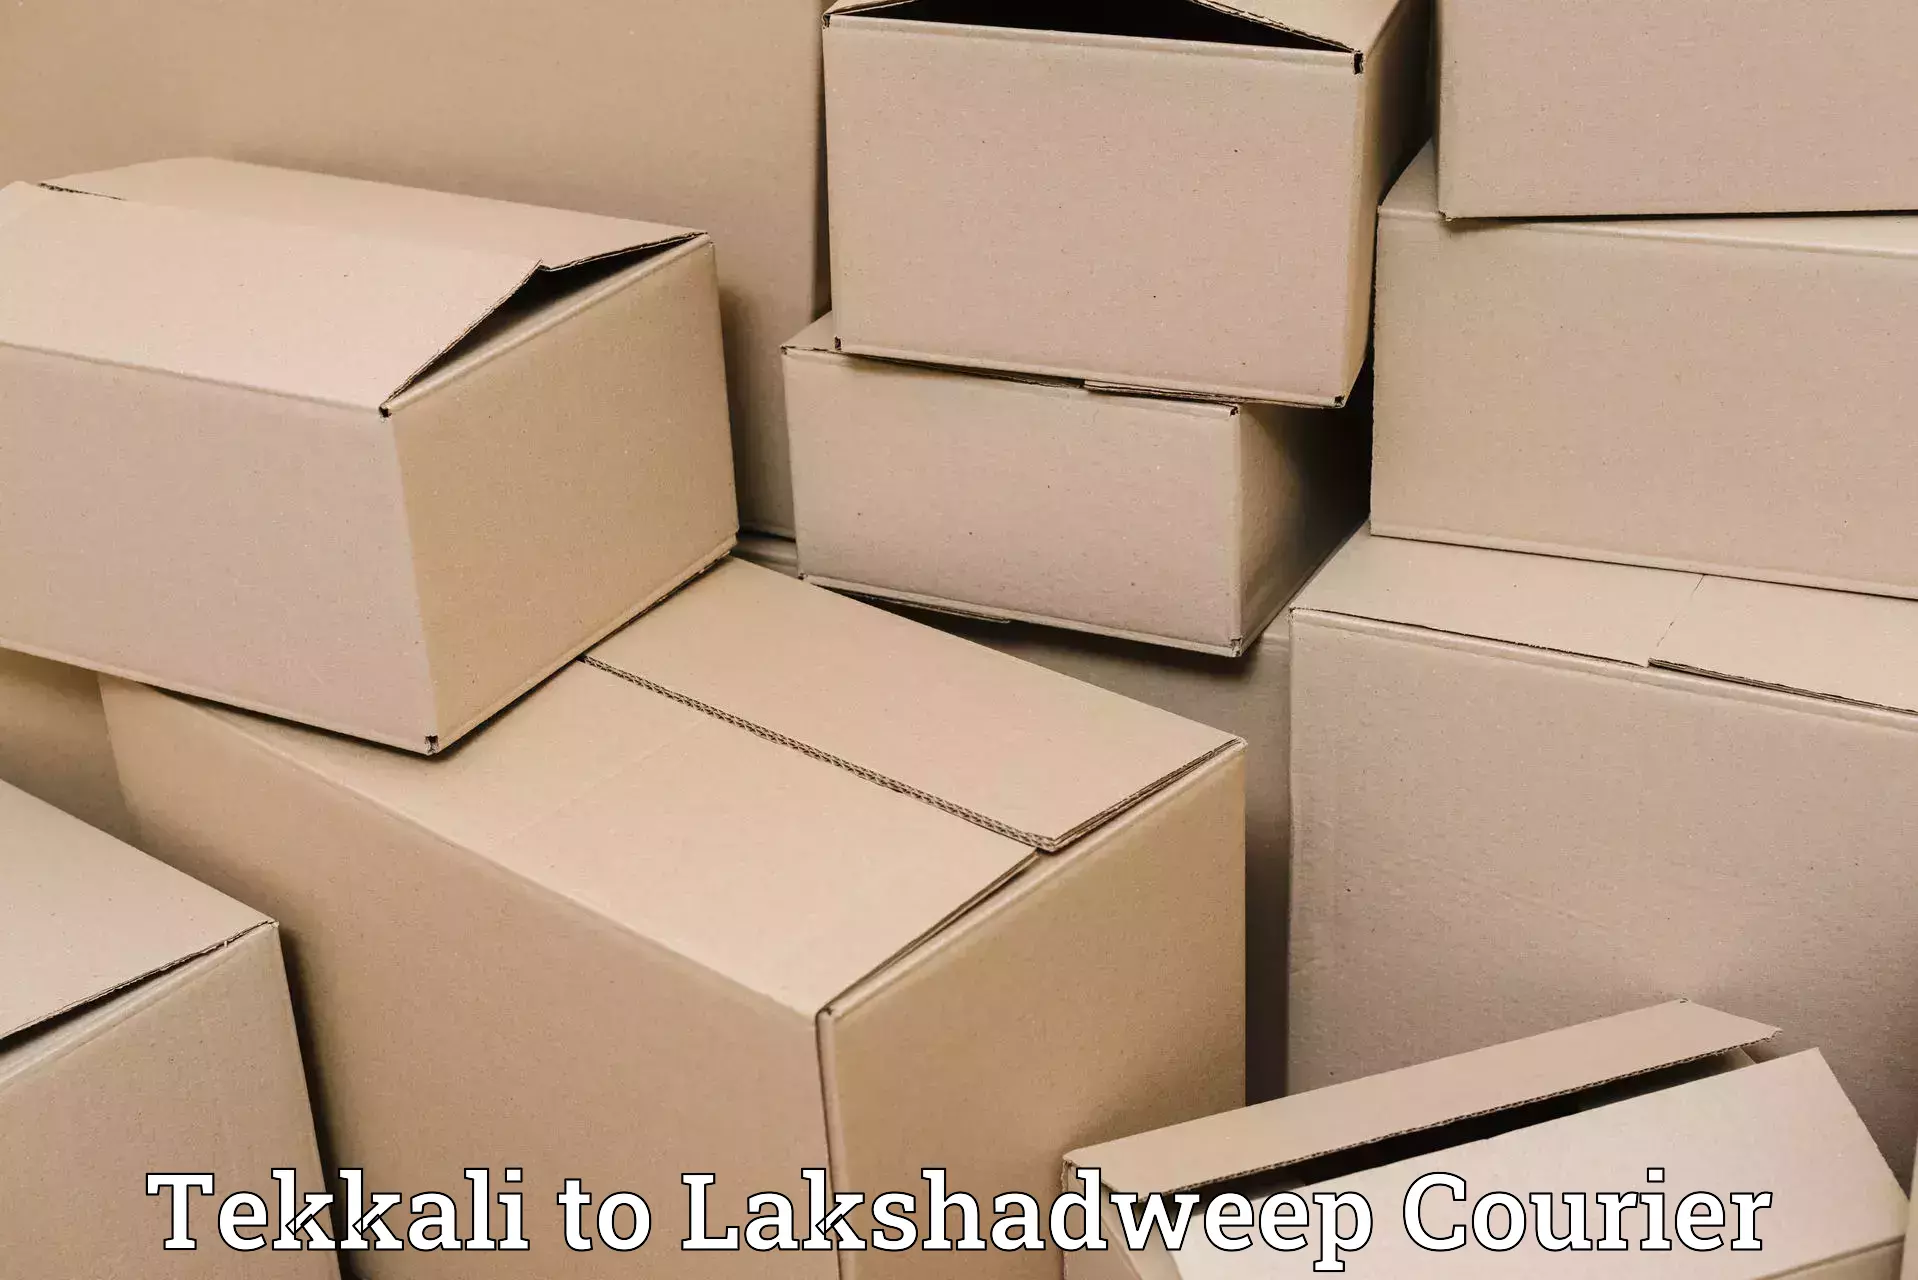 Luggage shipment specialists Tekkali to Lakshadweep